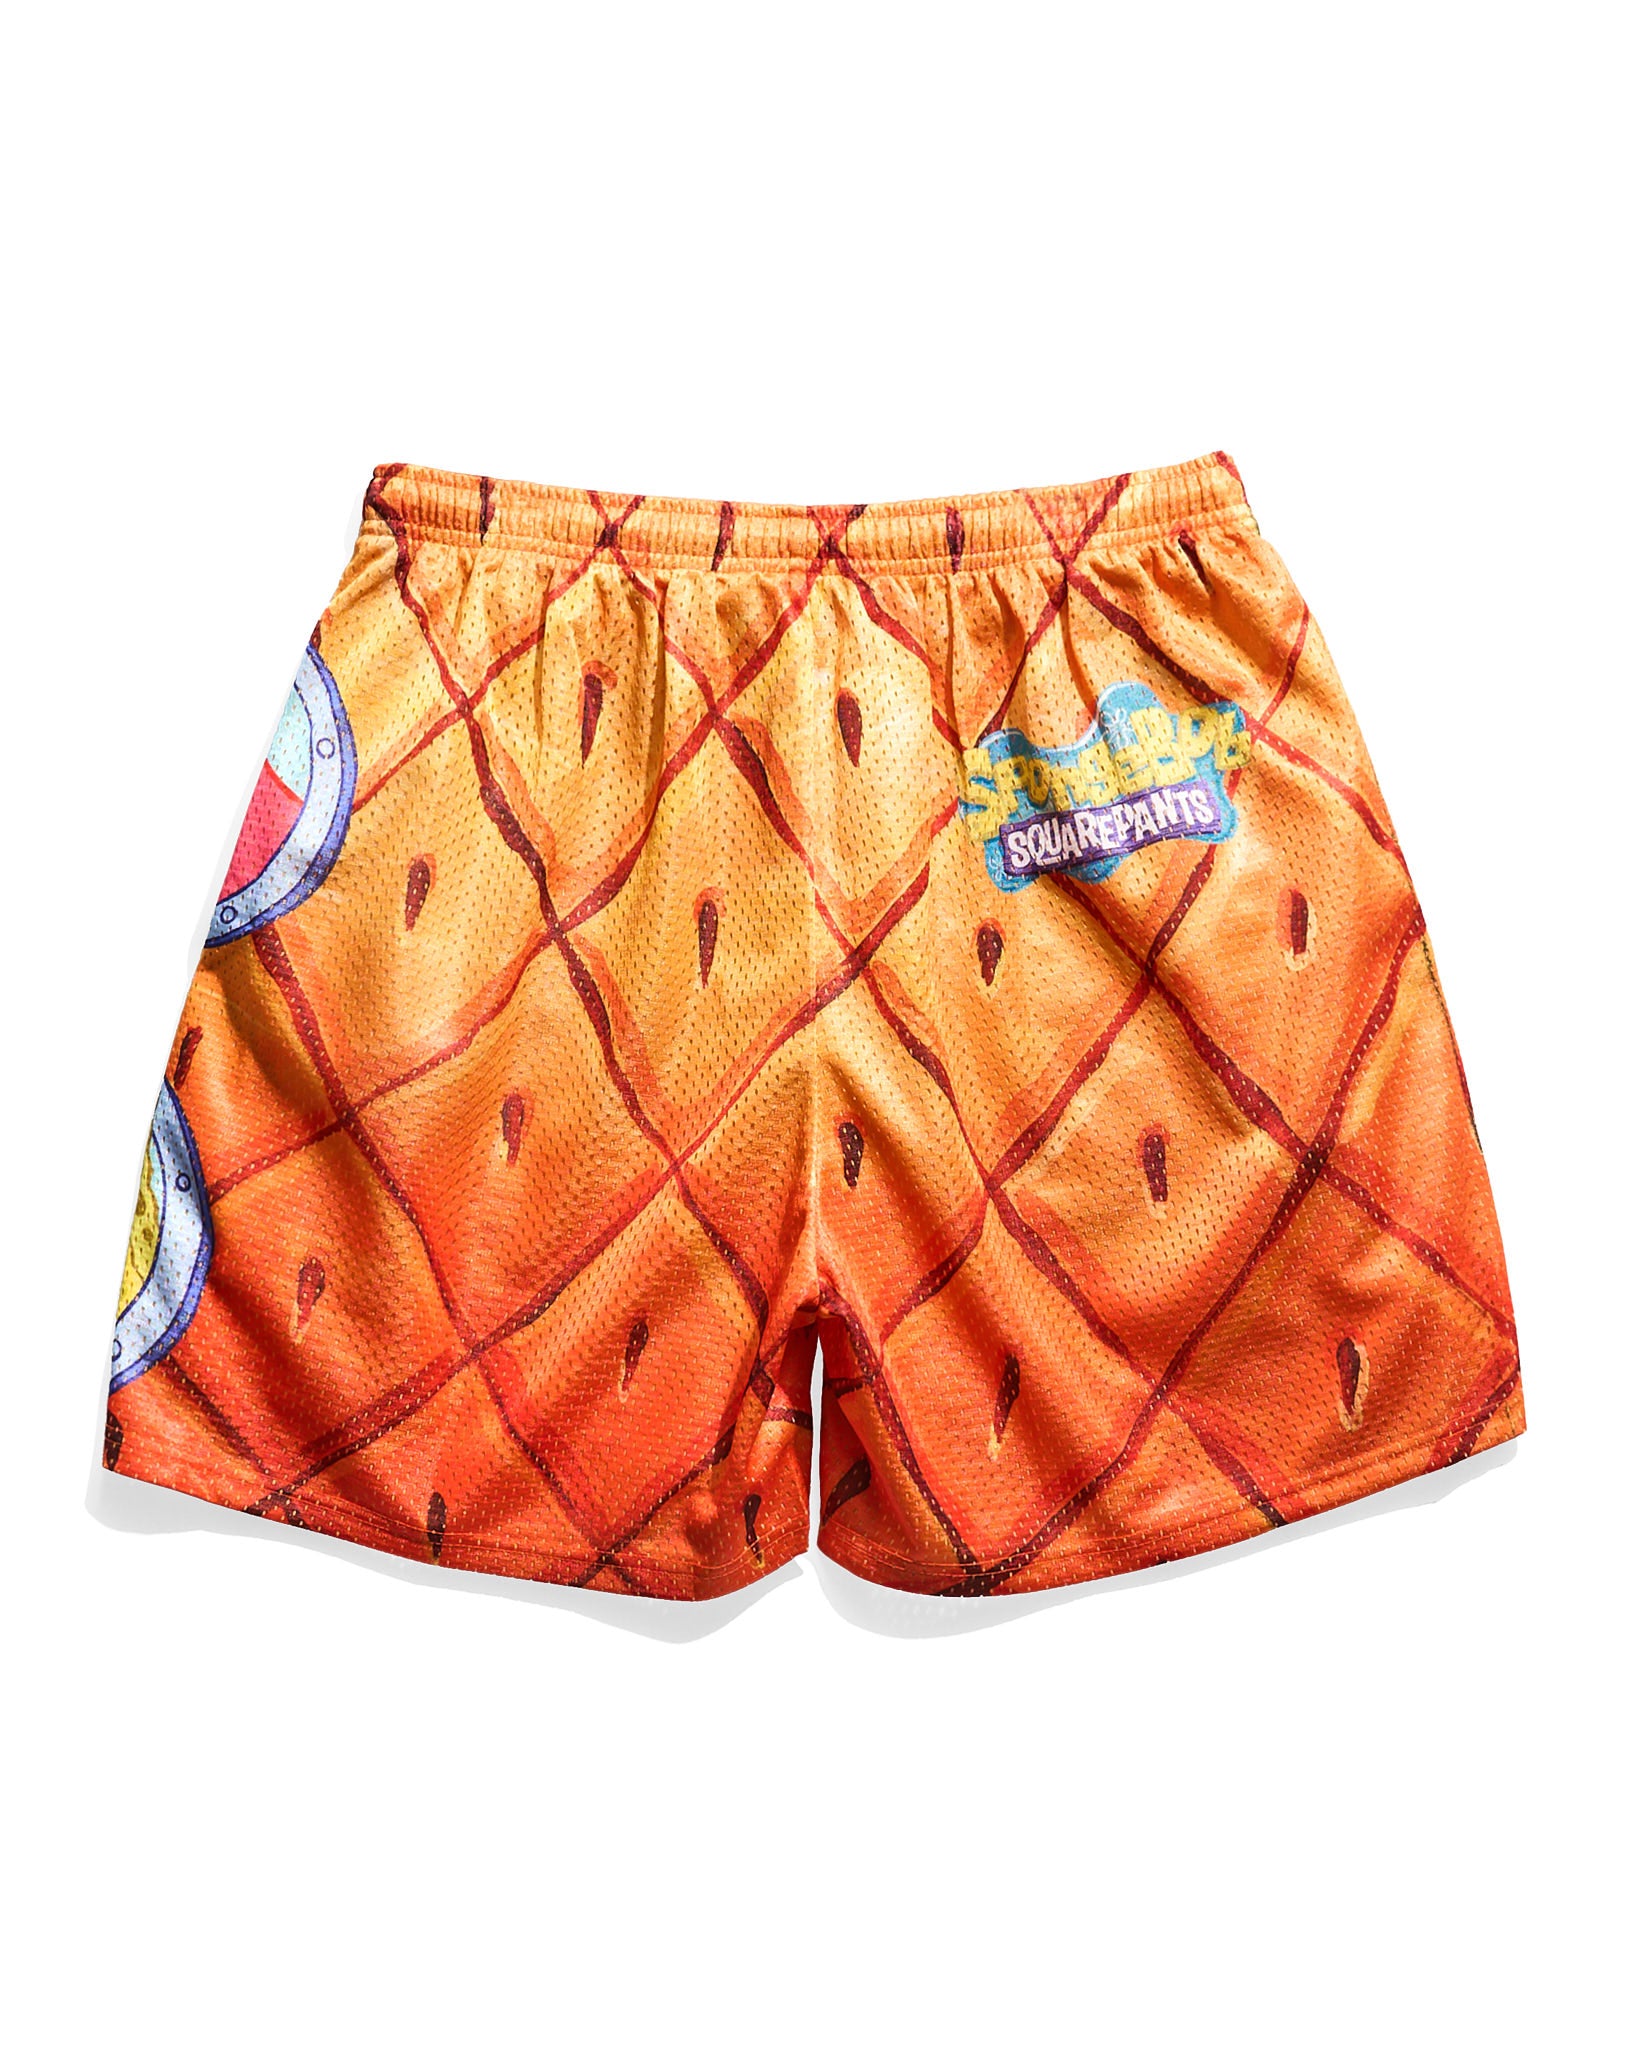 SpongeBob SquarePants Pineapple Home Retro Shorts